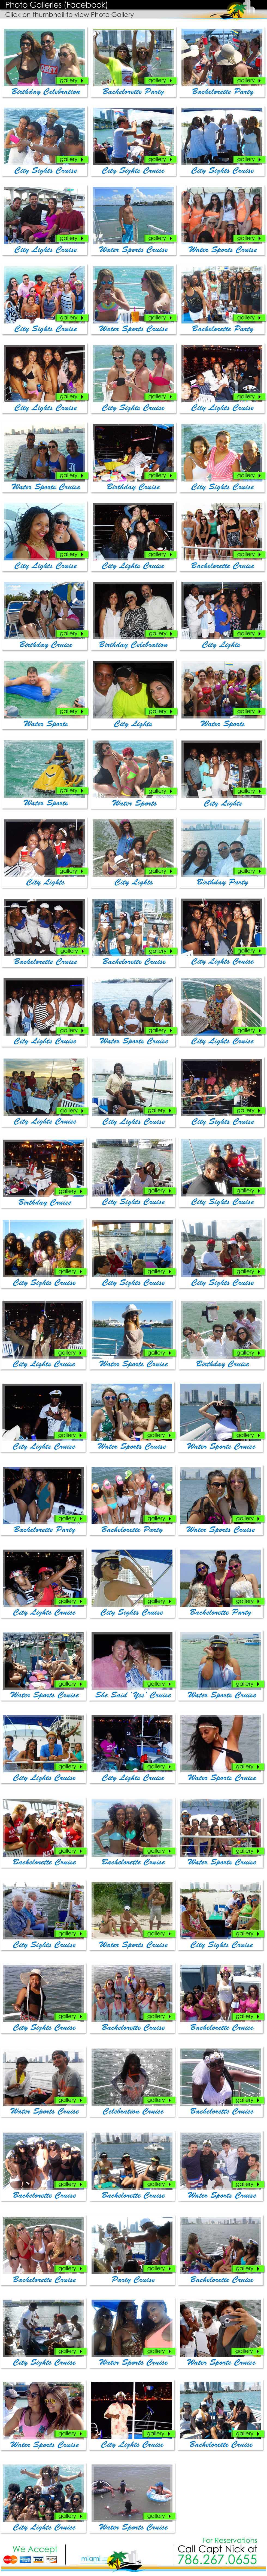 Miami Private Boat Cruises and Charters